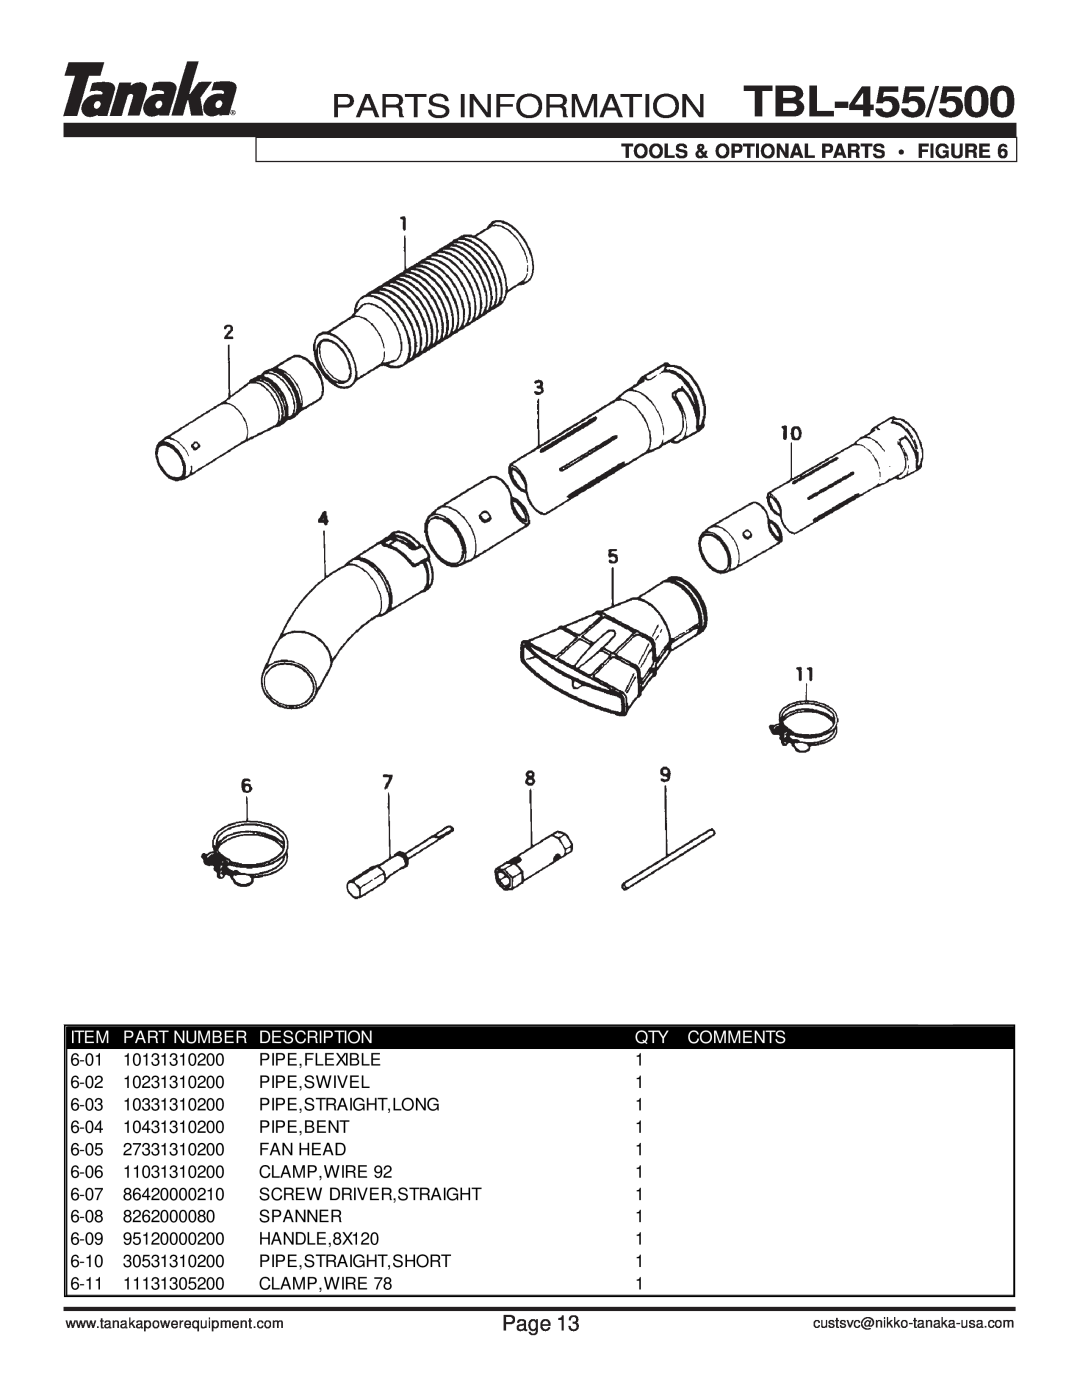 Tanaka manual Tools & Optional Parts Figure, PARTS INFORMATION TBL-455/500, Page, Part Number, Description, Qty Comments 